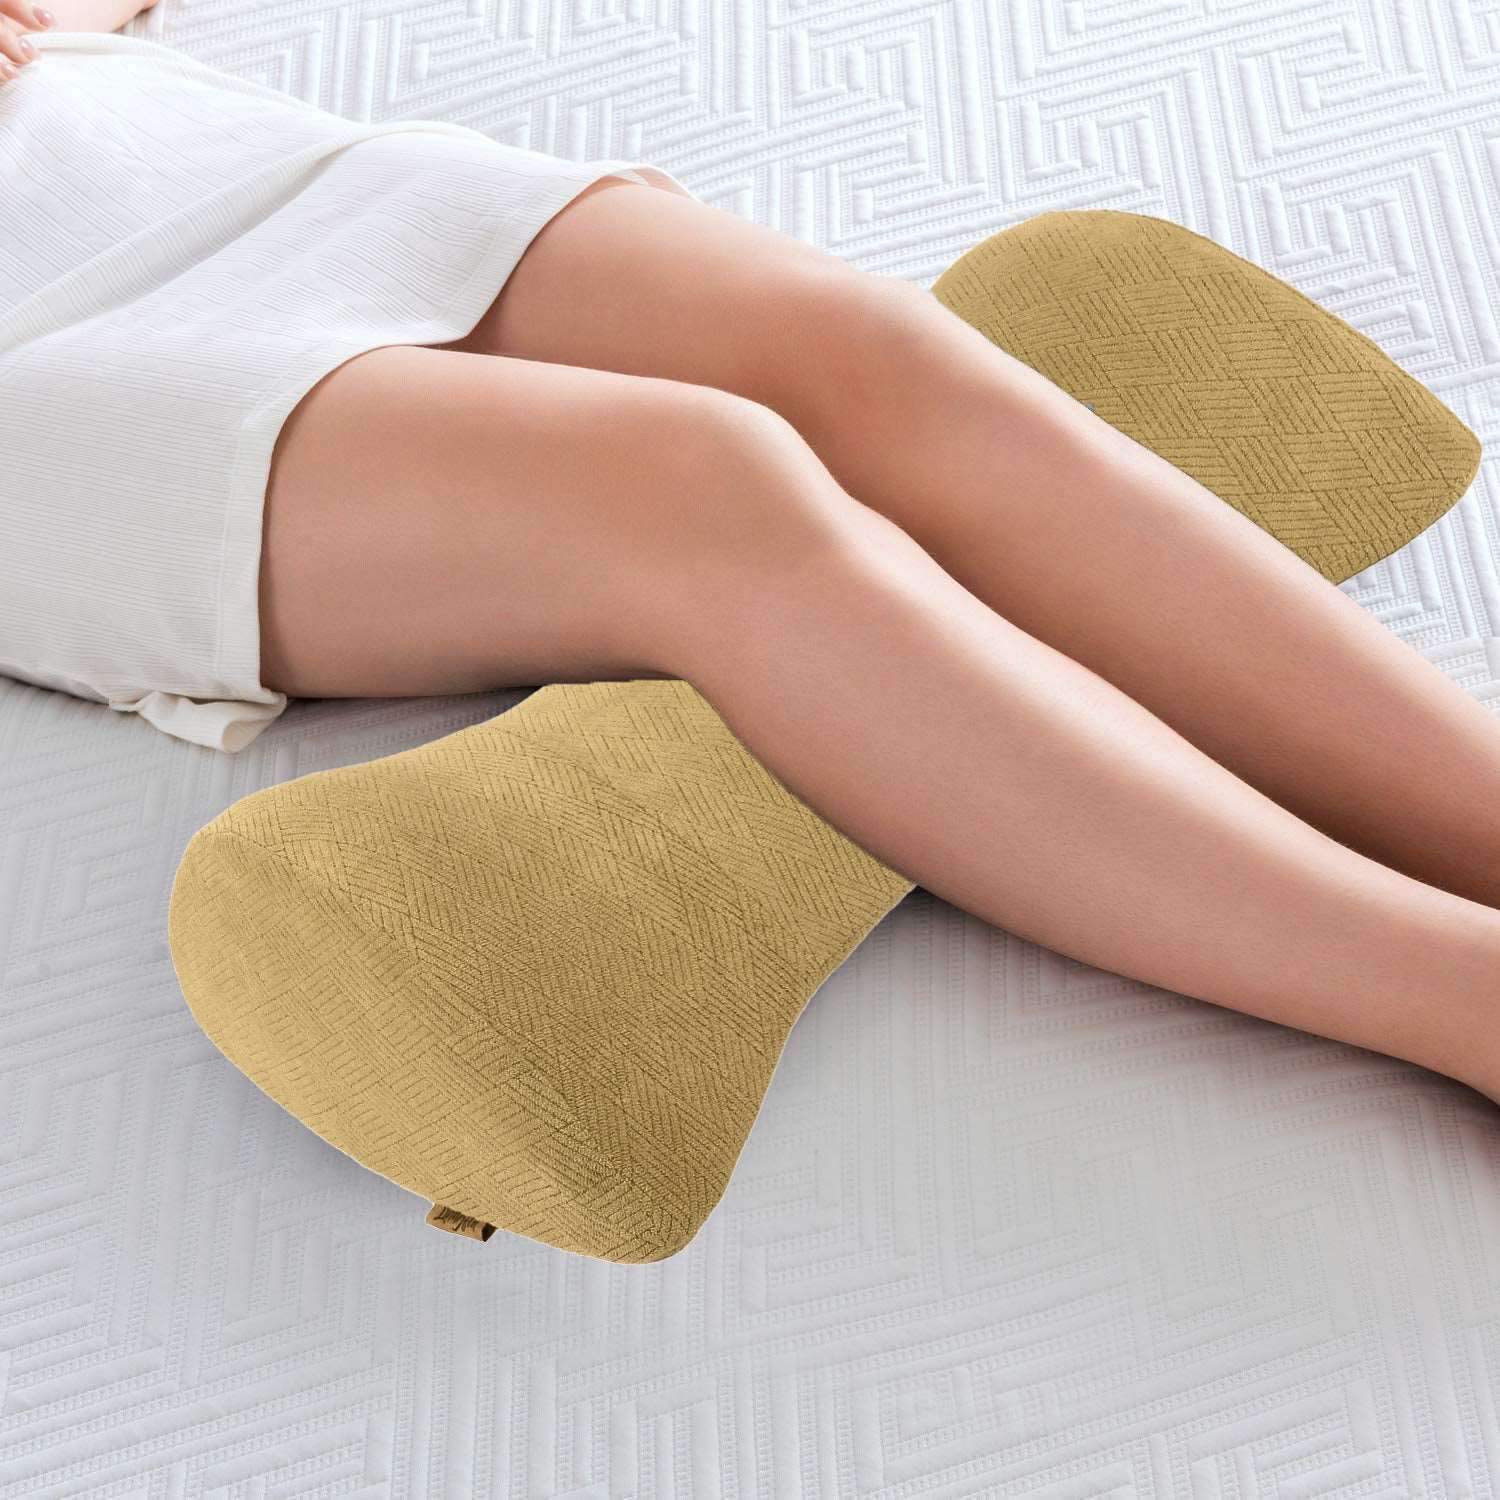 Knee Pillow By Slumbar, The Perfect Nights Sleep